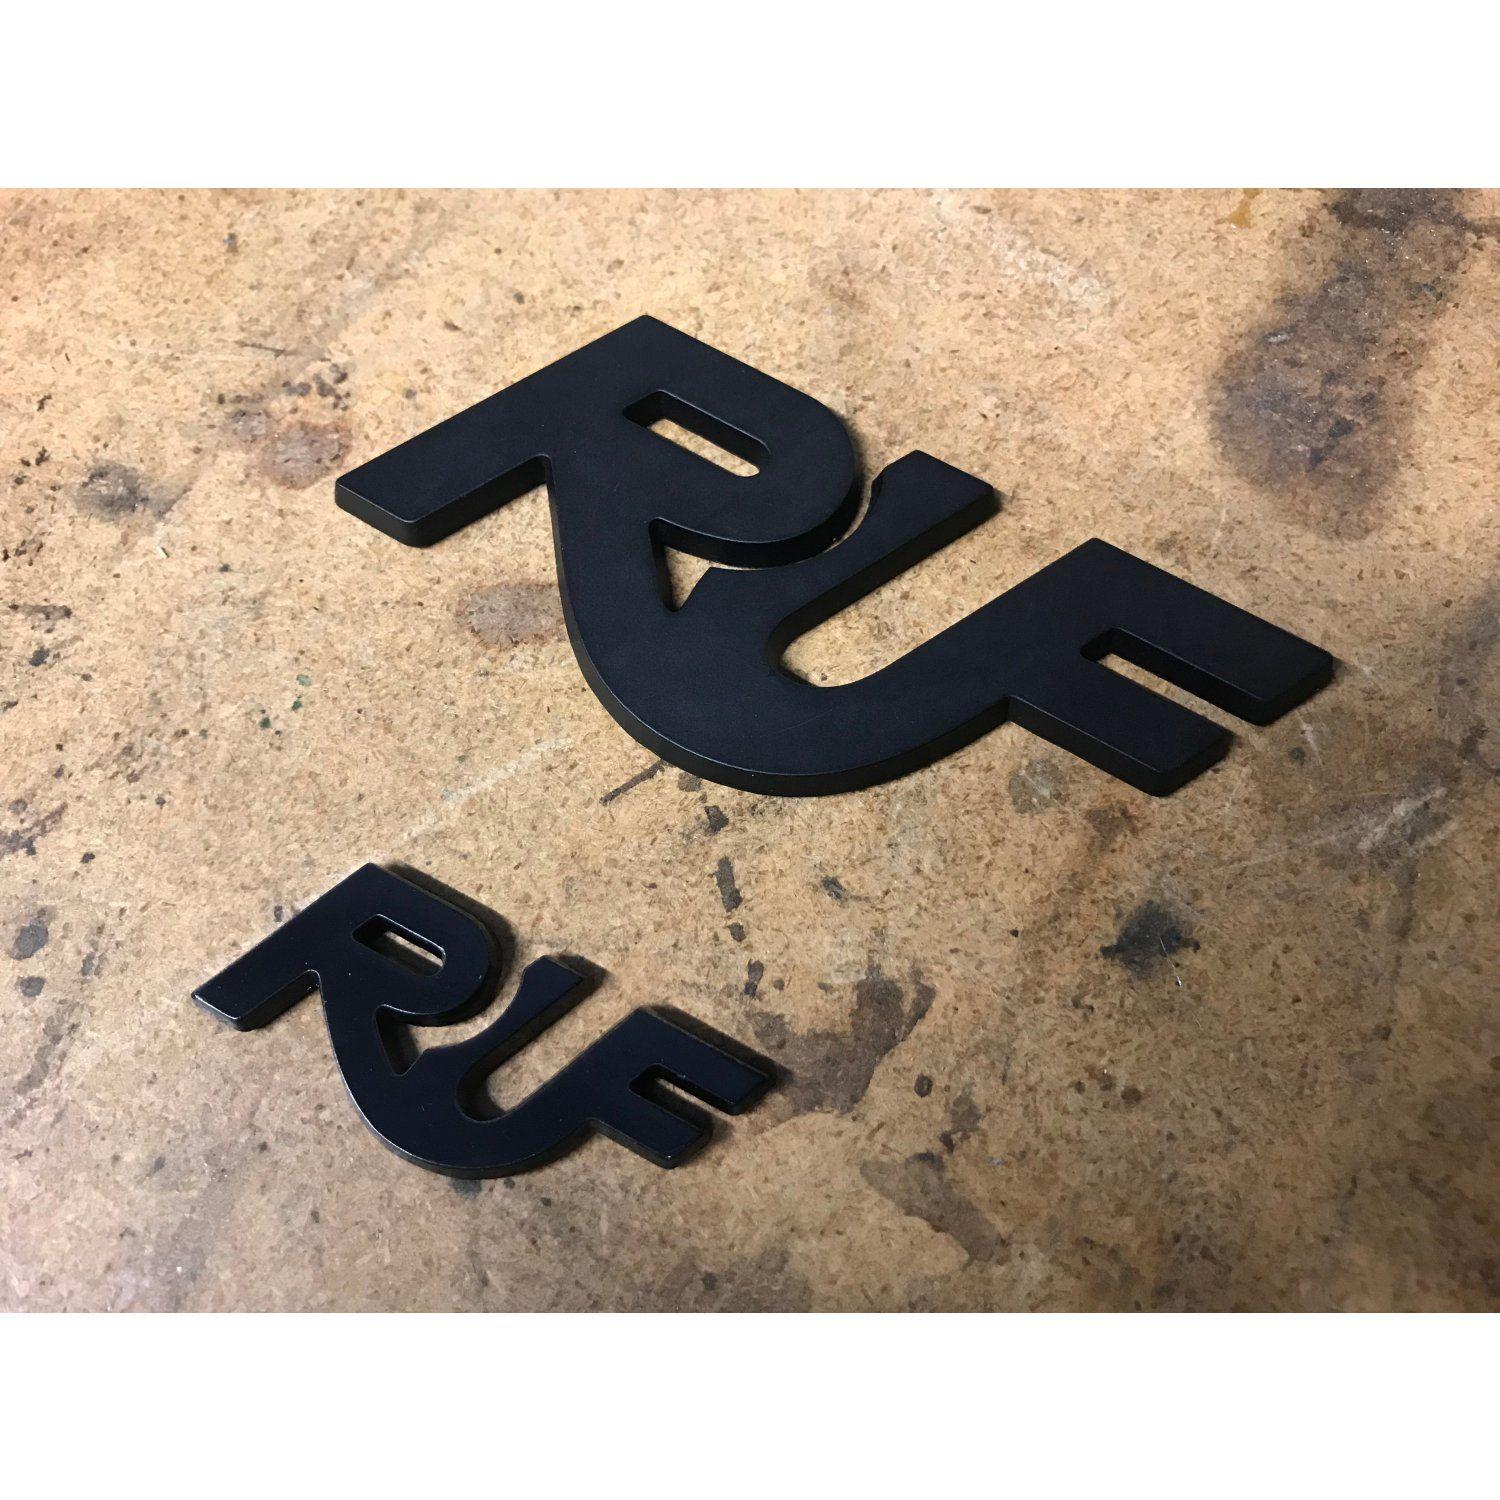 Ruf Porsche Logo - RUF Porsche Front and Rear Badge Emblems New